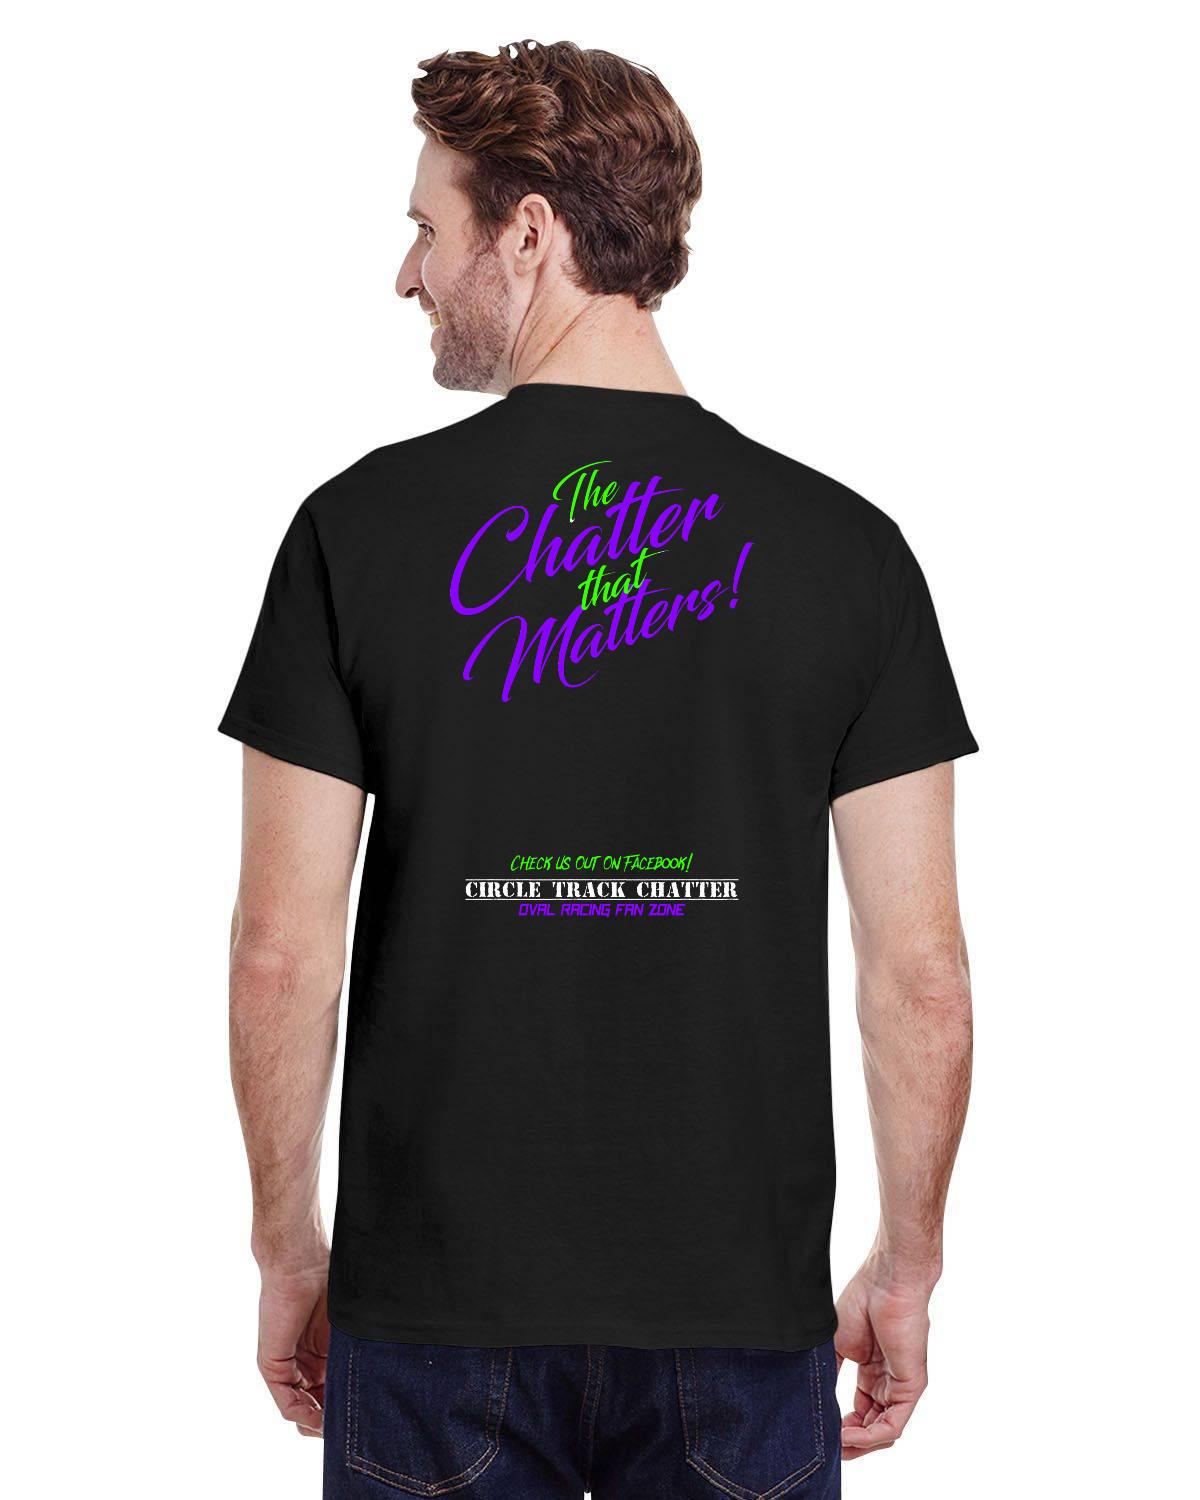 Circle Track Chatter Men's Tshirt